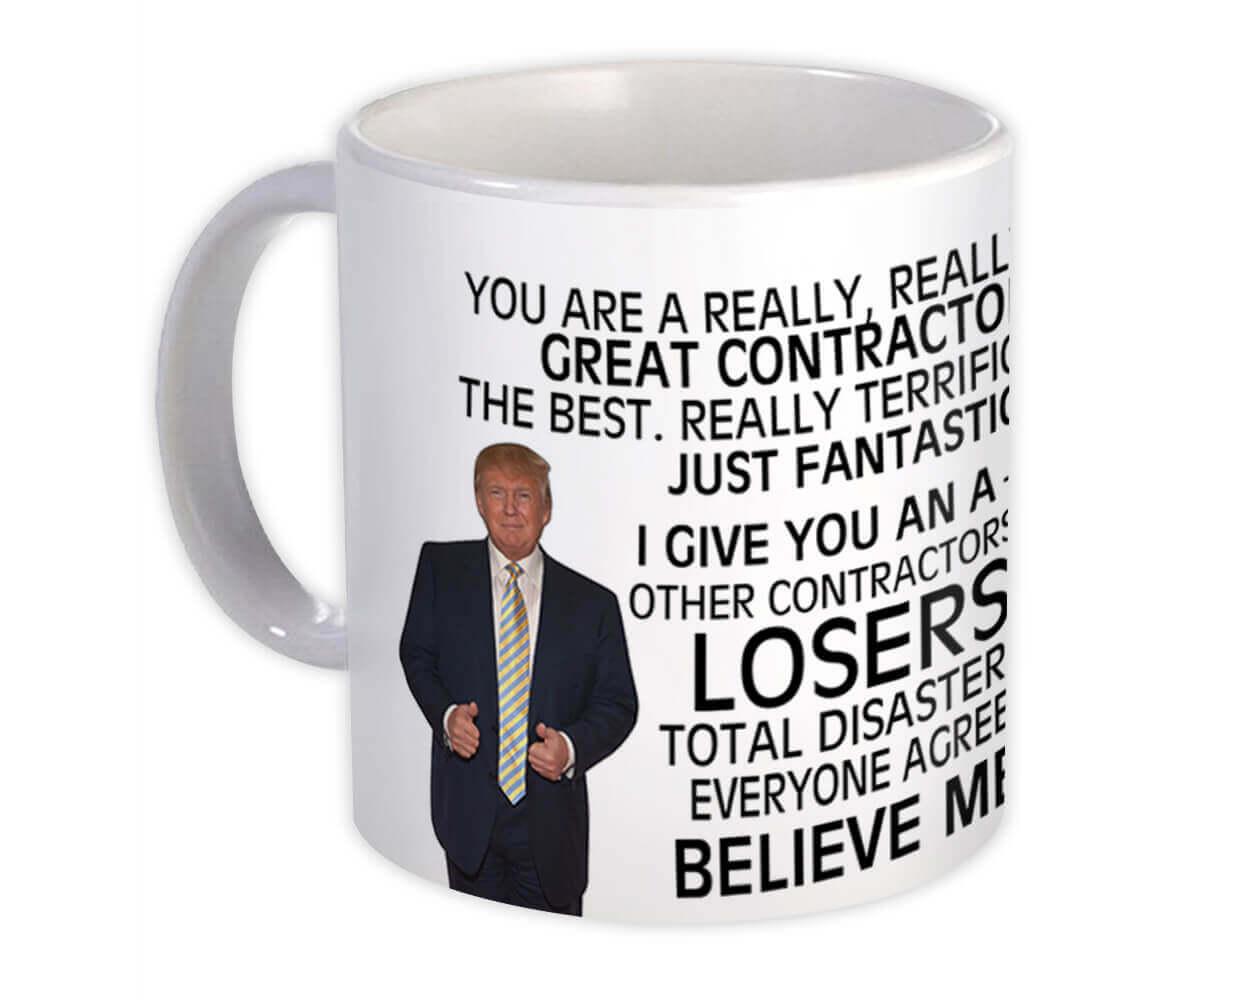 CARPENTER Gift Funny Trump Mug Best Carpenter Birthday Christmas Jobs